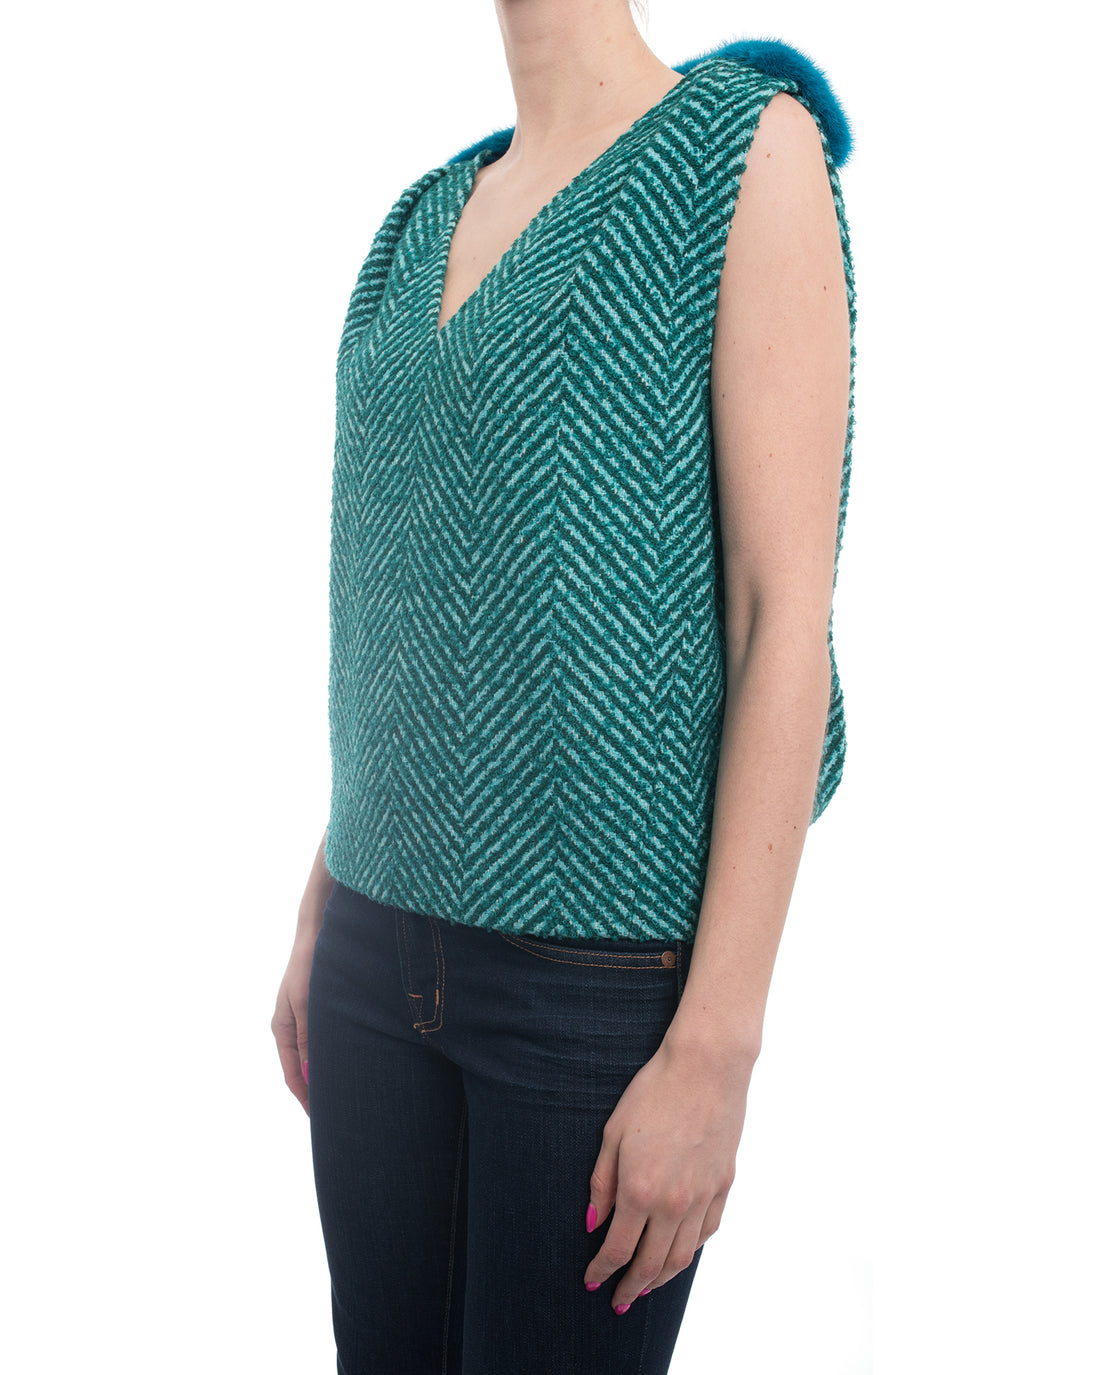 Prada Fall 2015 Runway Green Tweed Sleeveless Top with Blue Mink Trim - 6